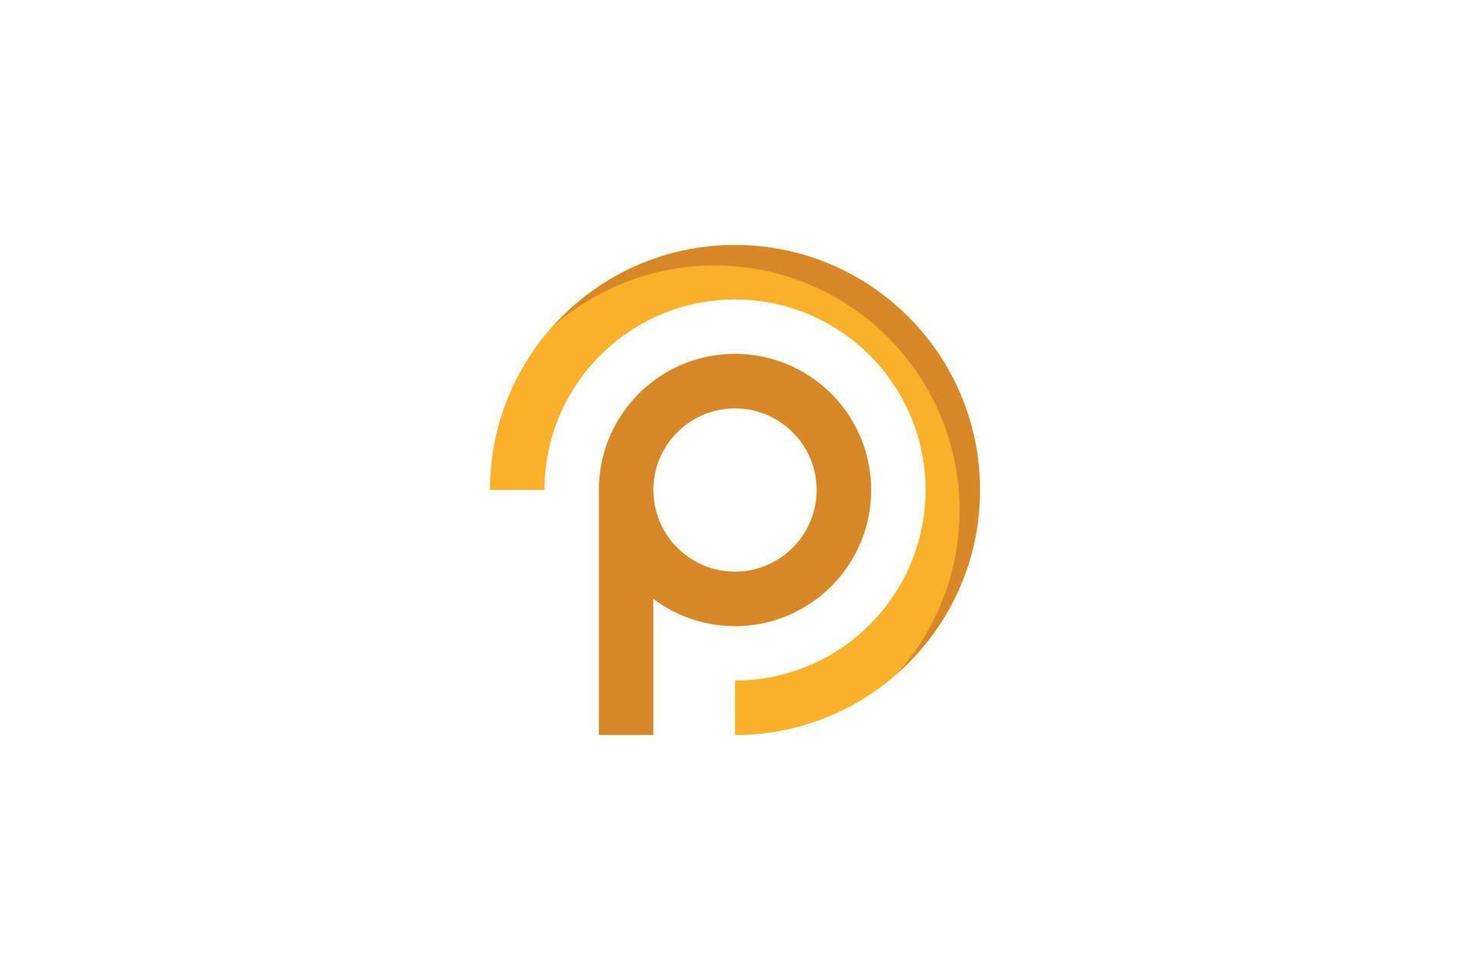 brief p modern logo vector